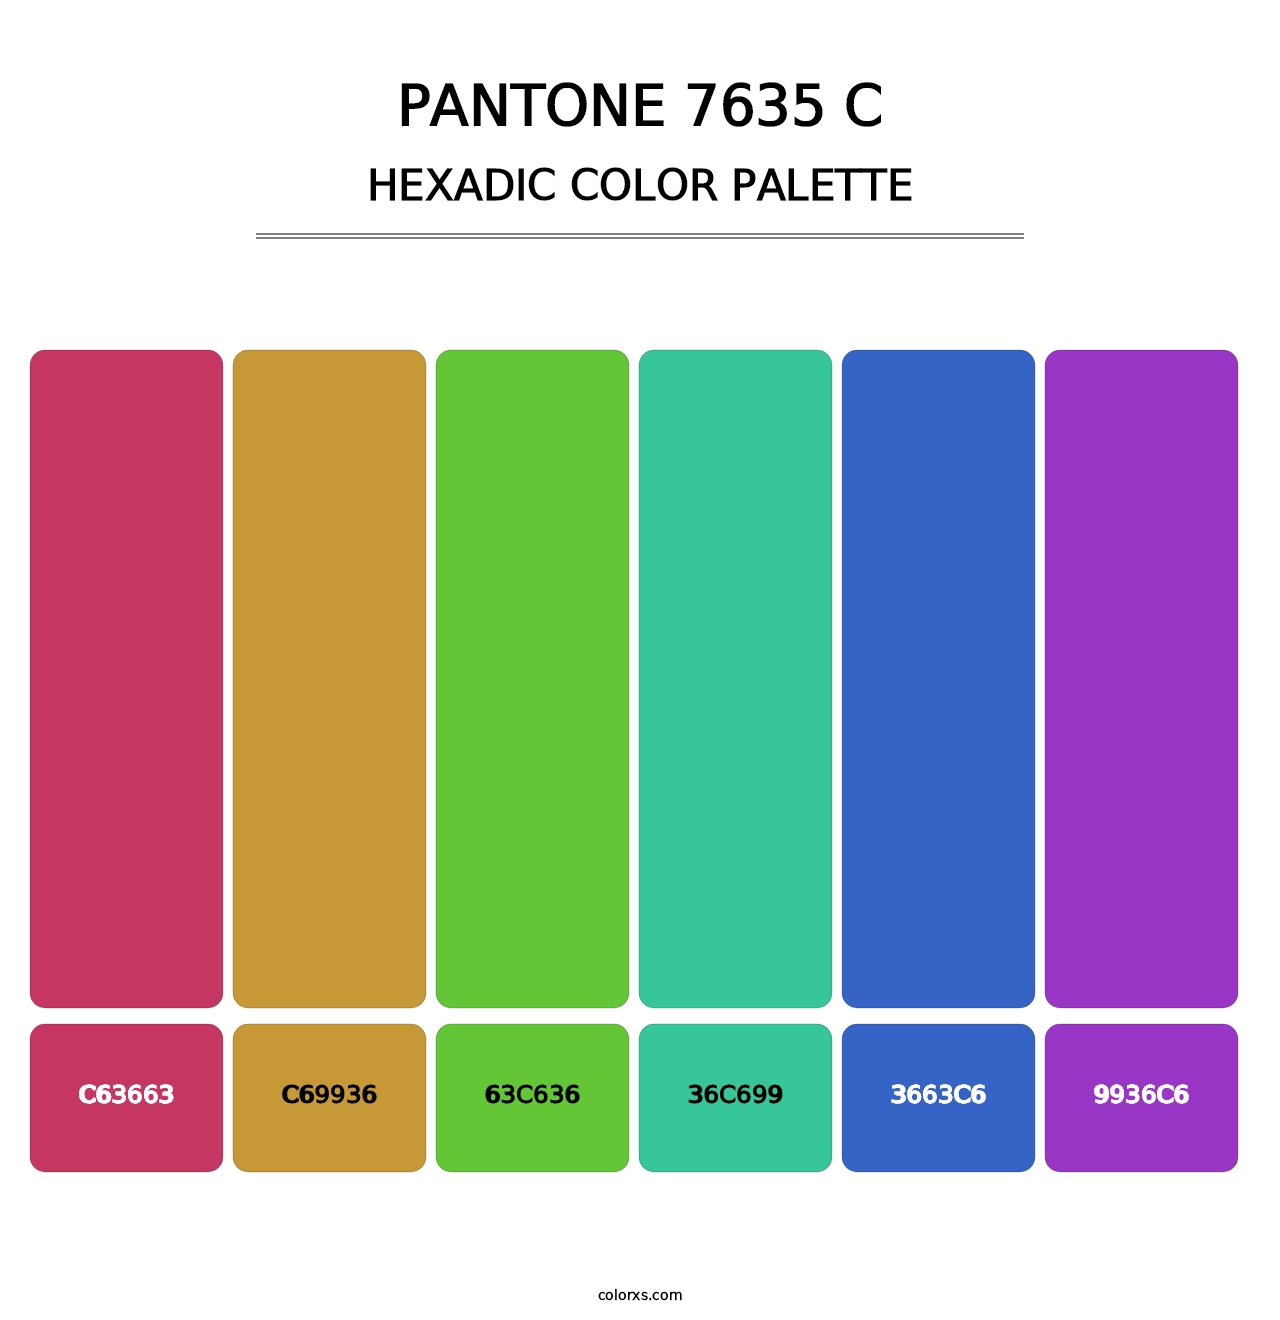 PANTONE 7635 C - Hexadic Color Palette